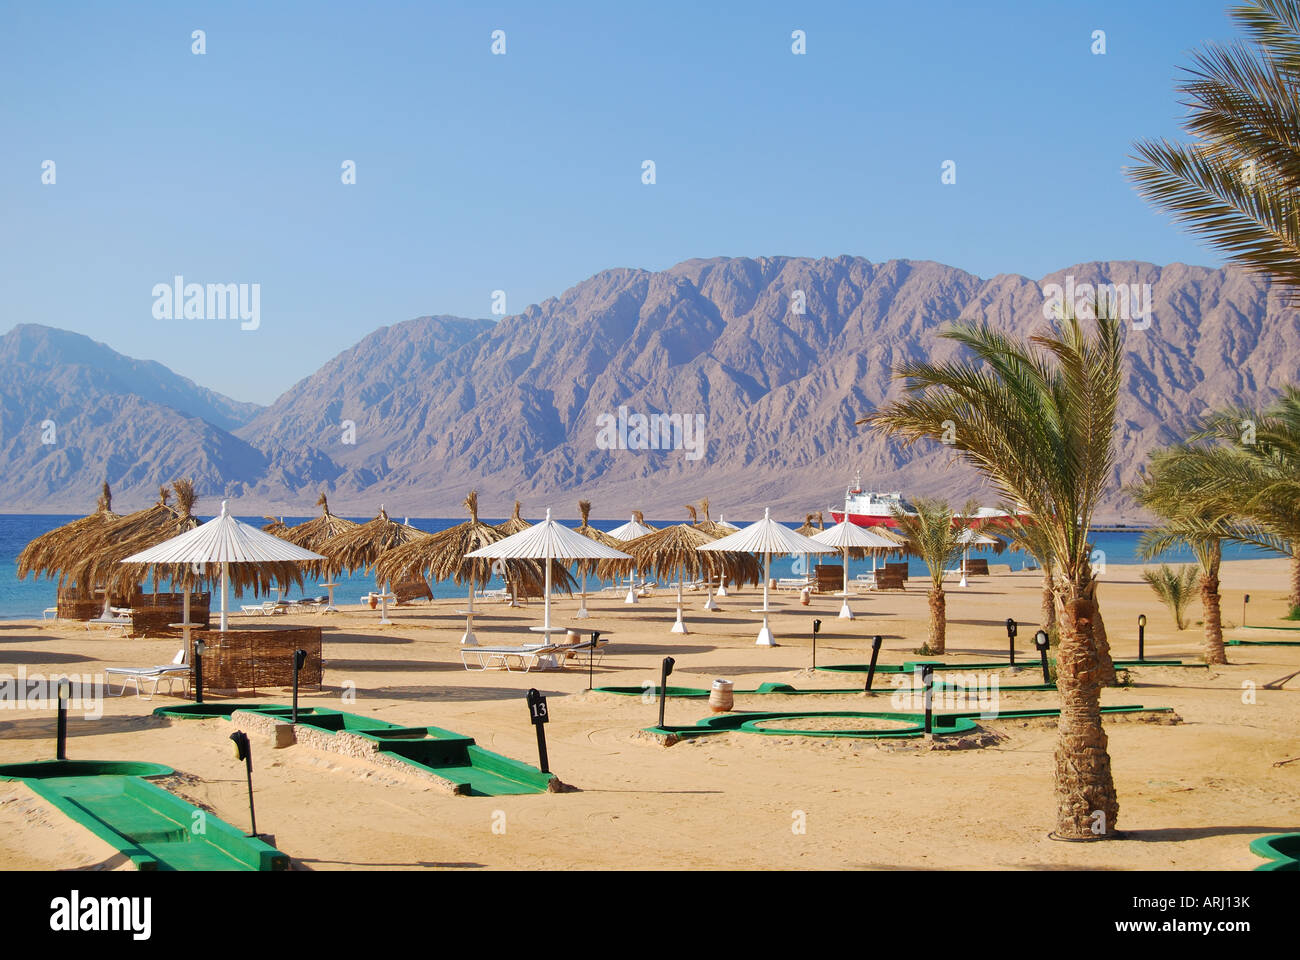 Hilton Nuweiba Coral Resort Hotel beach, Nuweiba, Sinai Peninsula ...